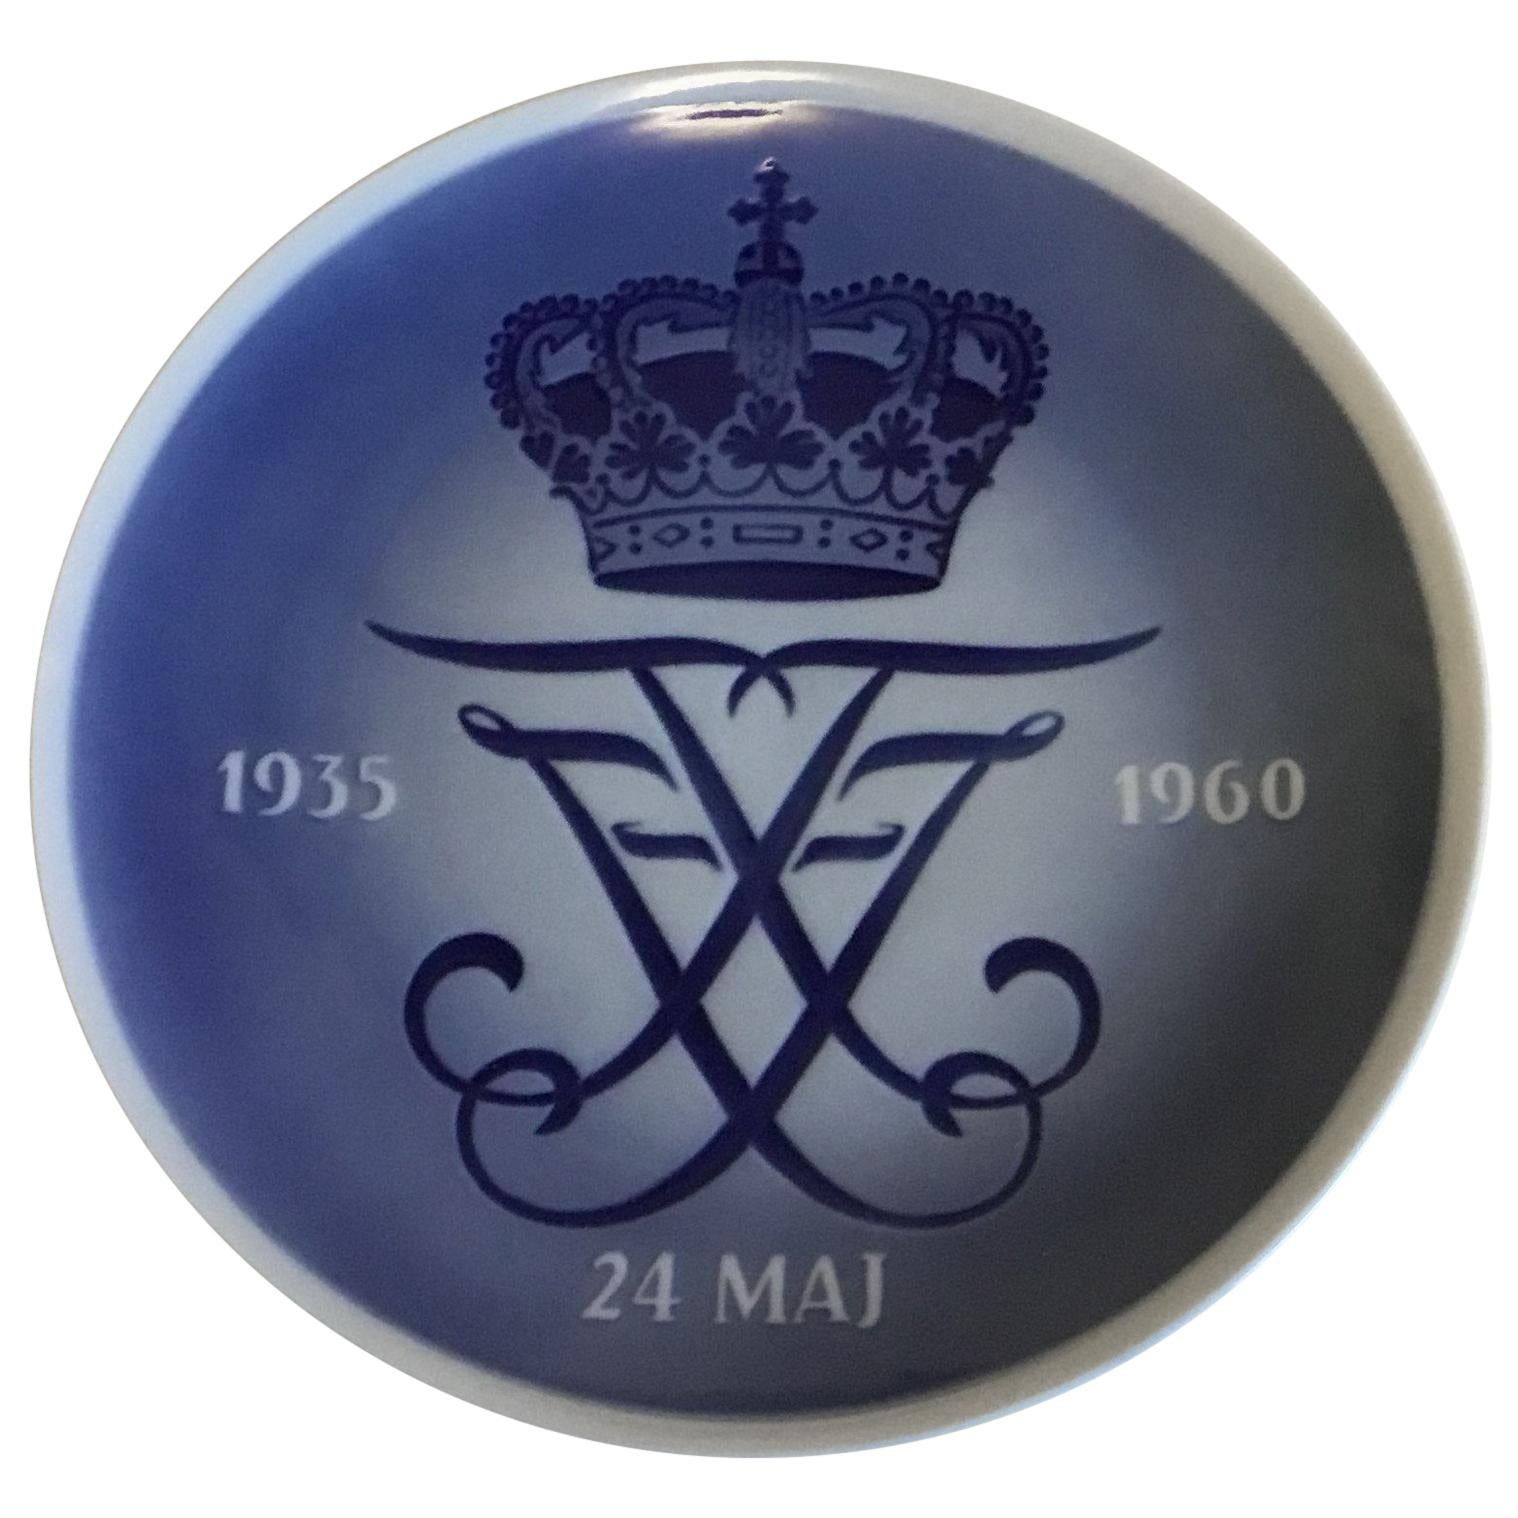 Royal Copenhagen Commemorative Plate from 1960 RC-CM308 For Sale